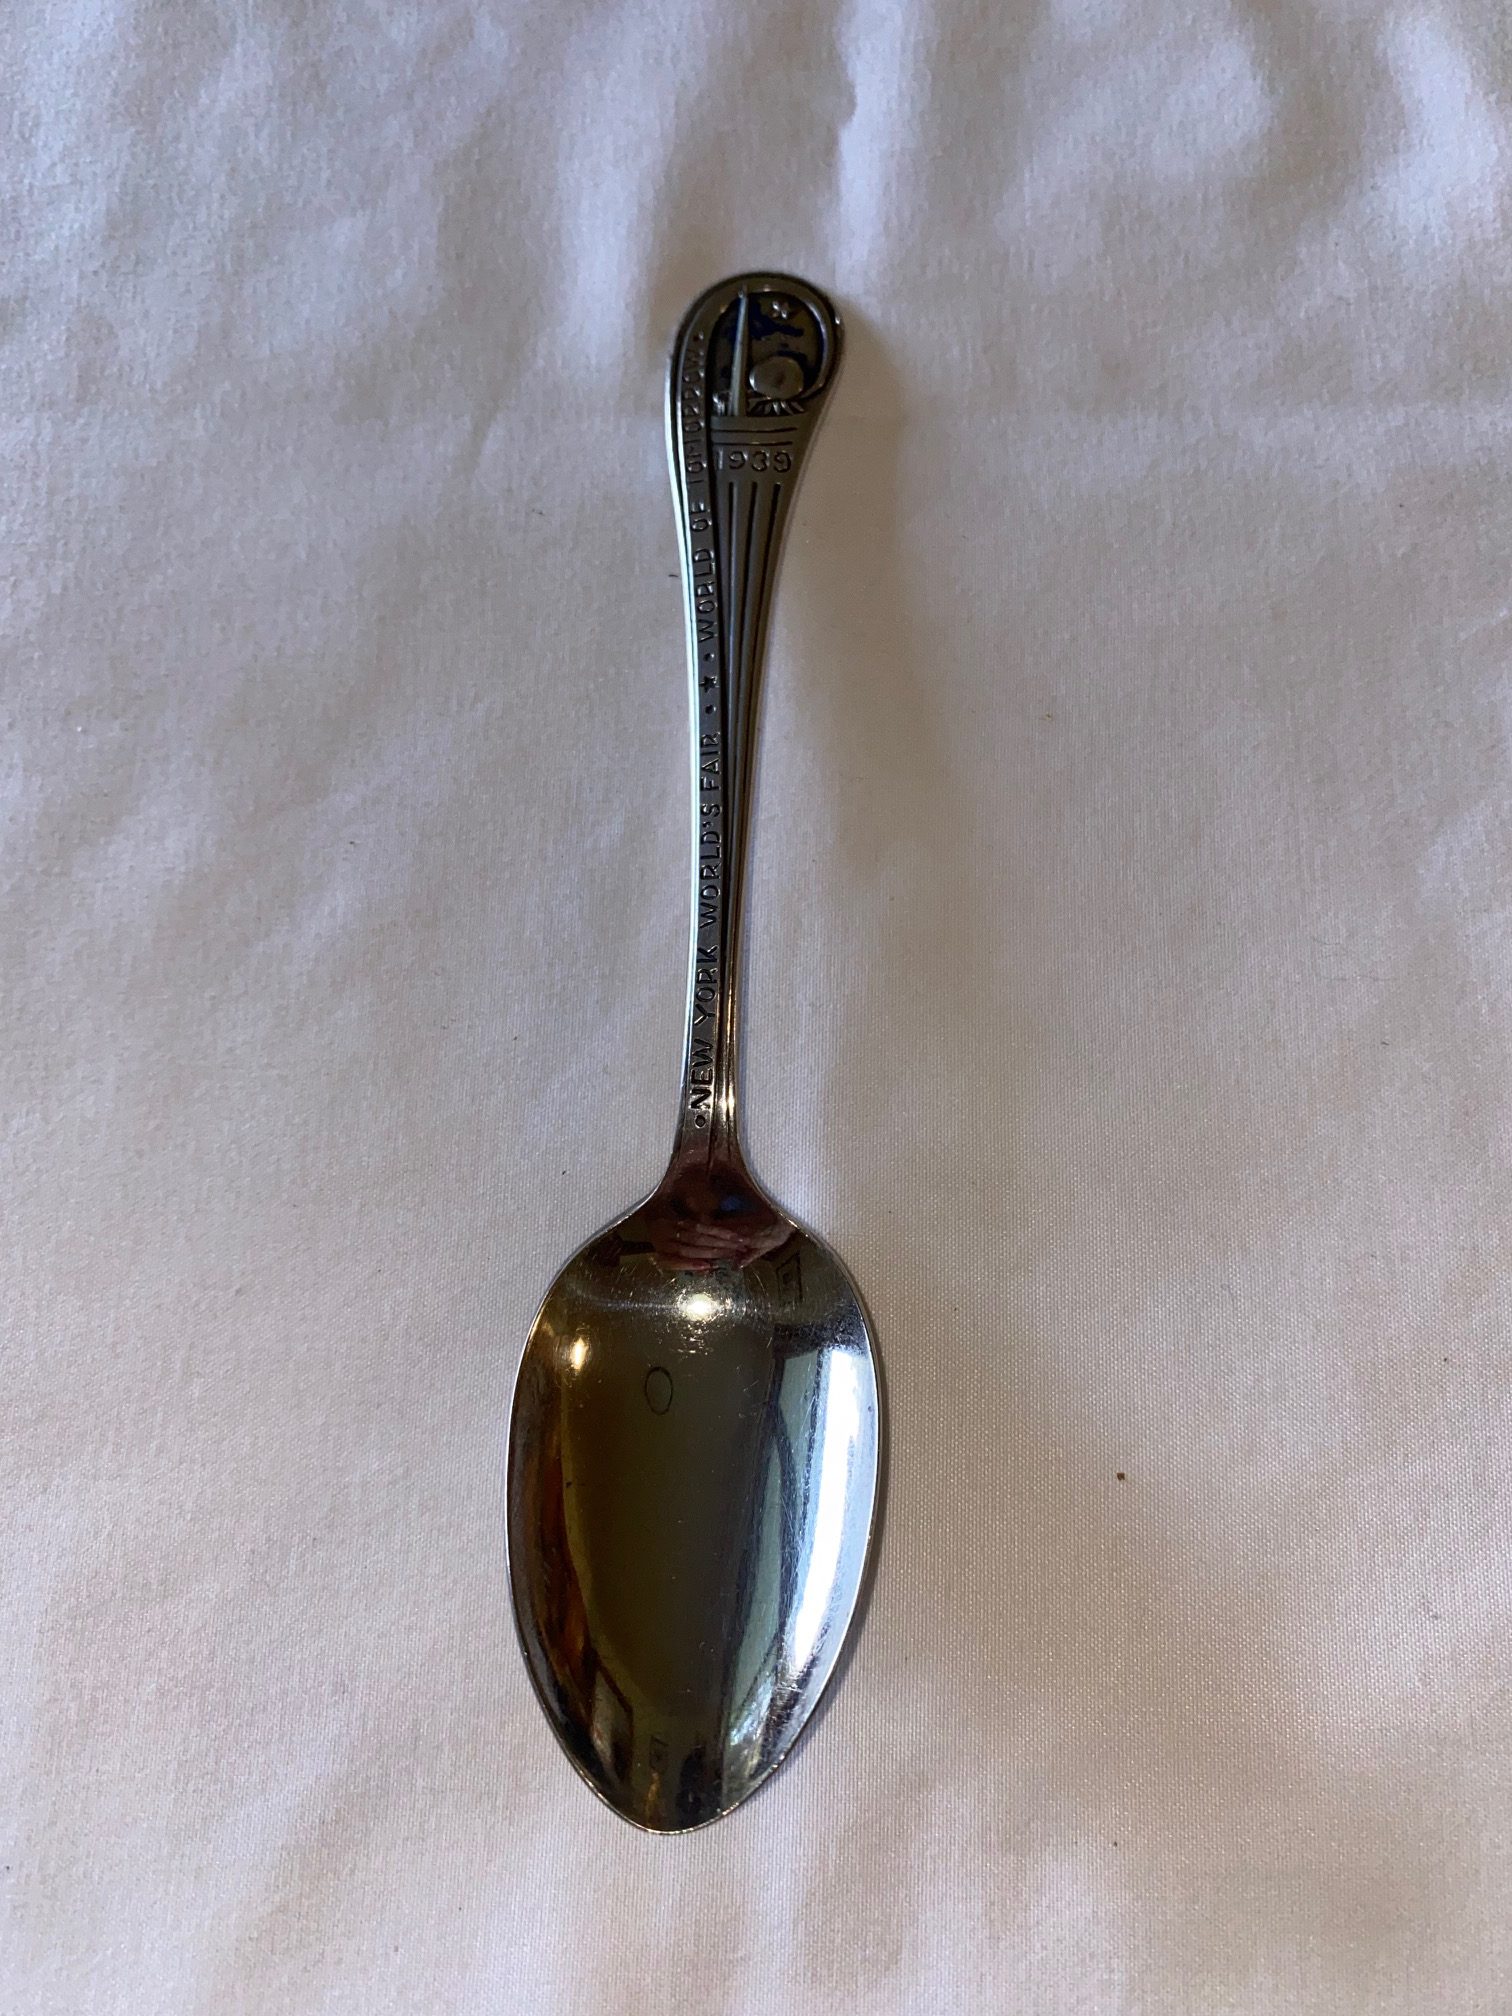 1939 World’s Fair Spoon